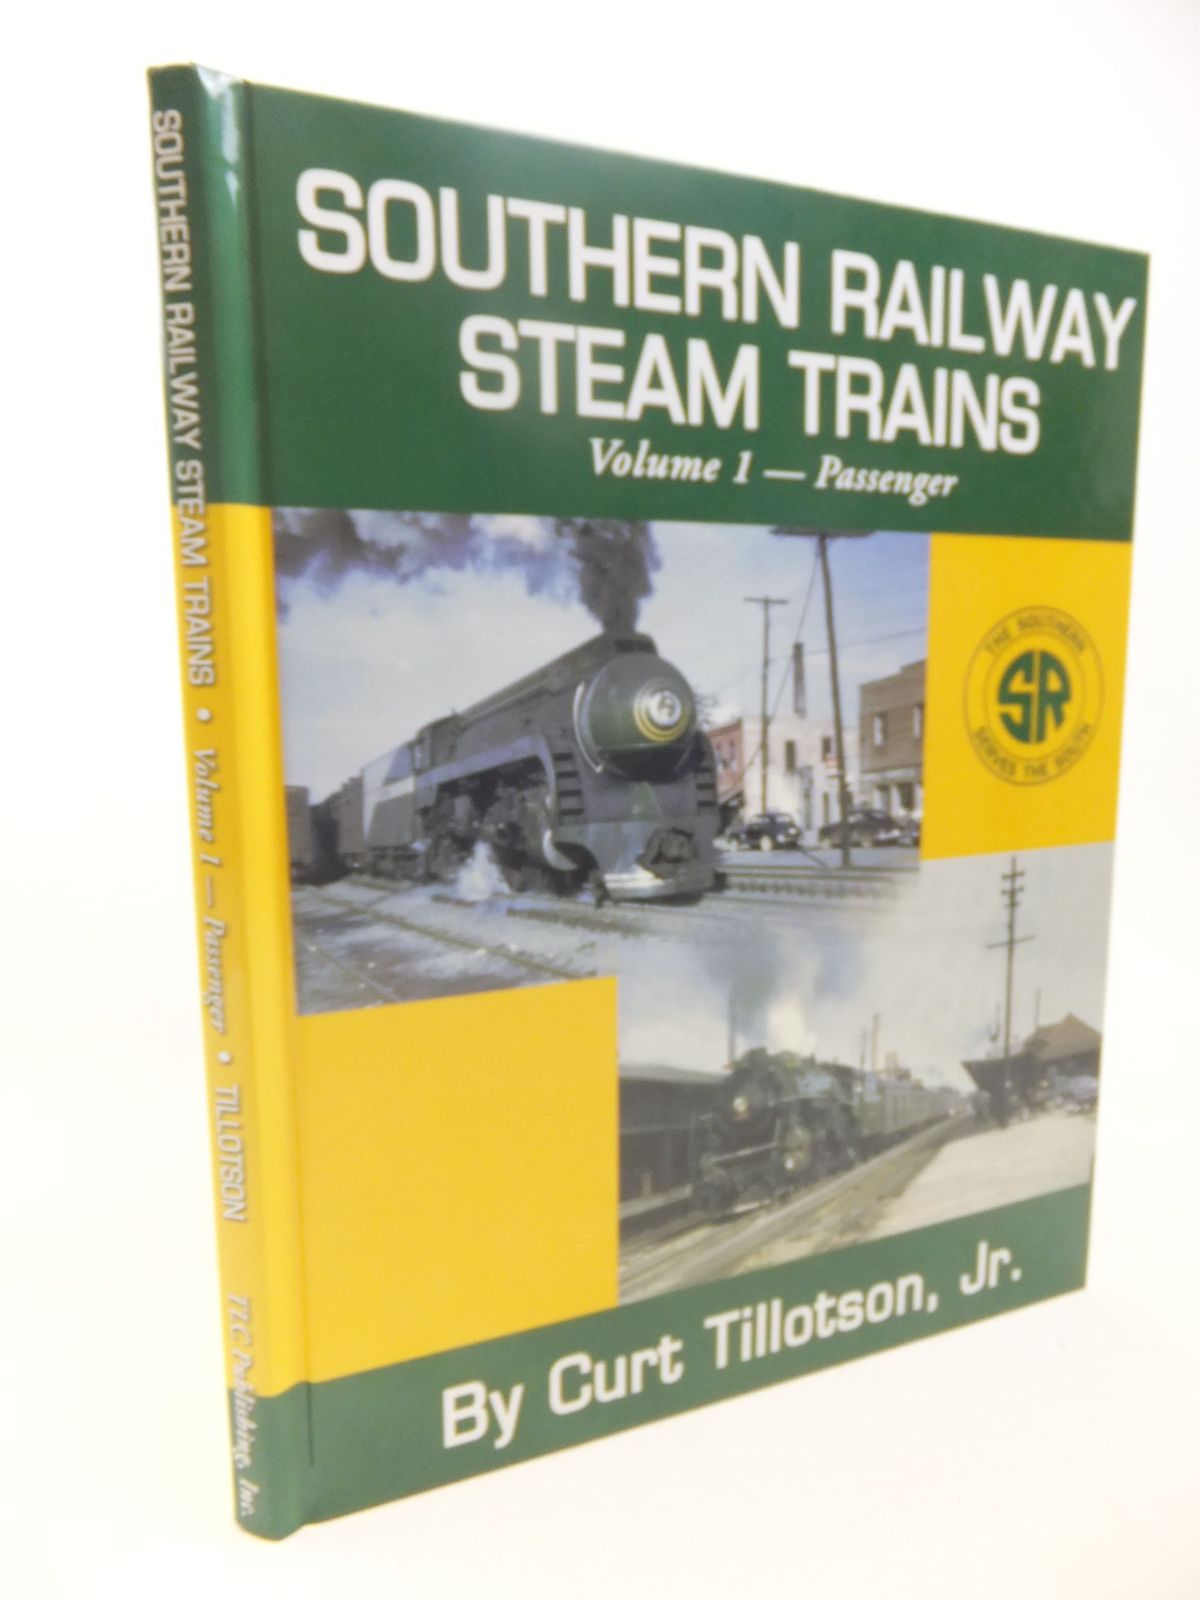 TILLOTSON, CURT - Southern Railway Steam Trains: Volume 1 - Passengers